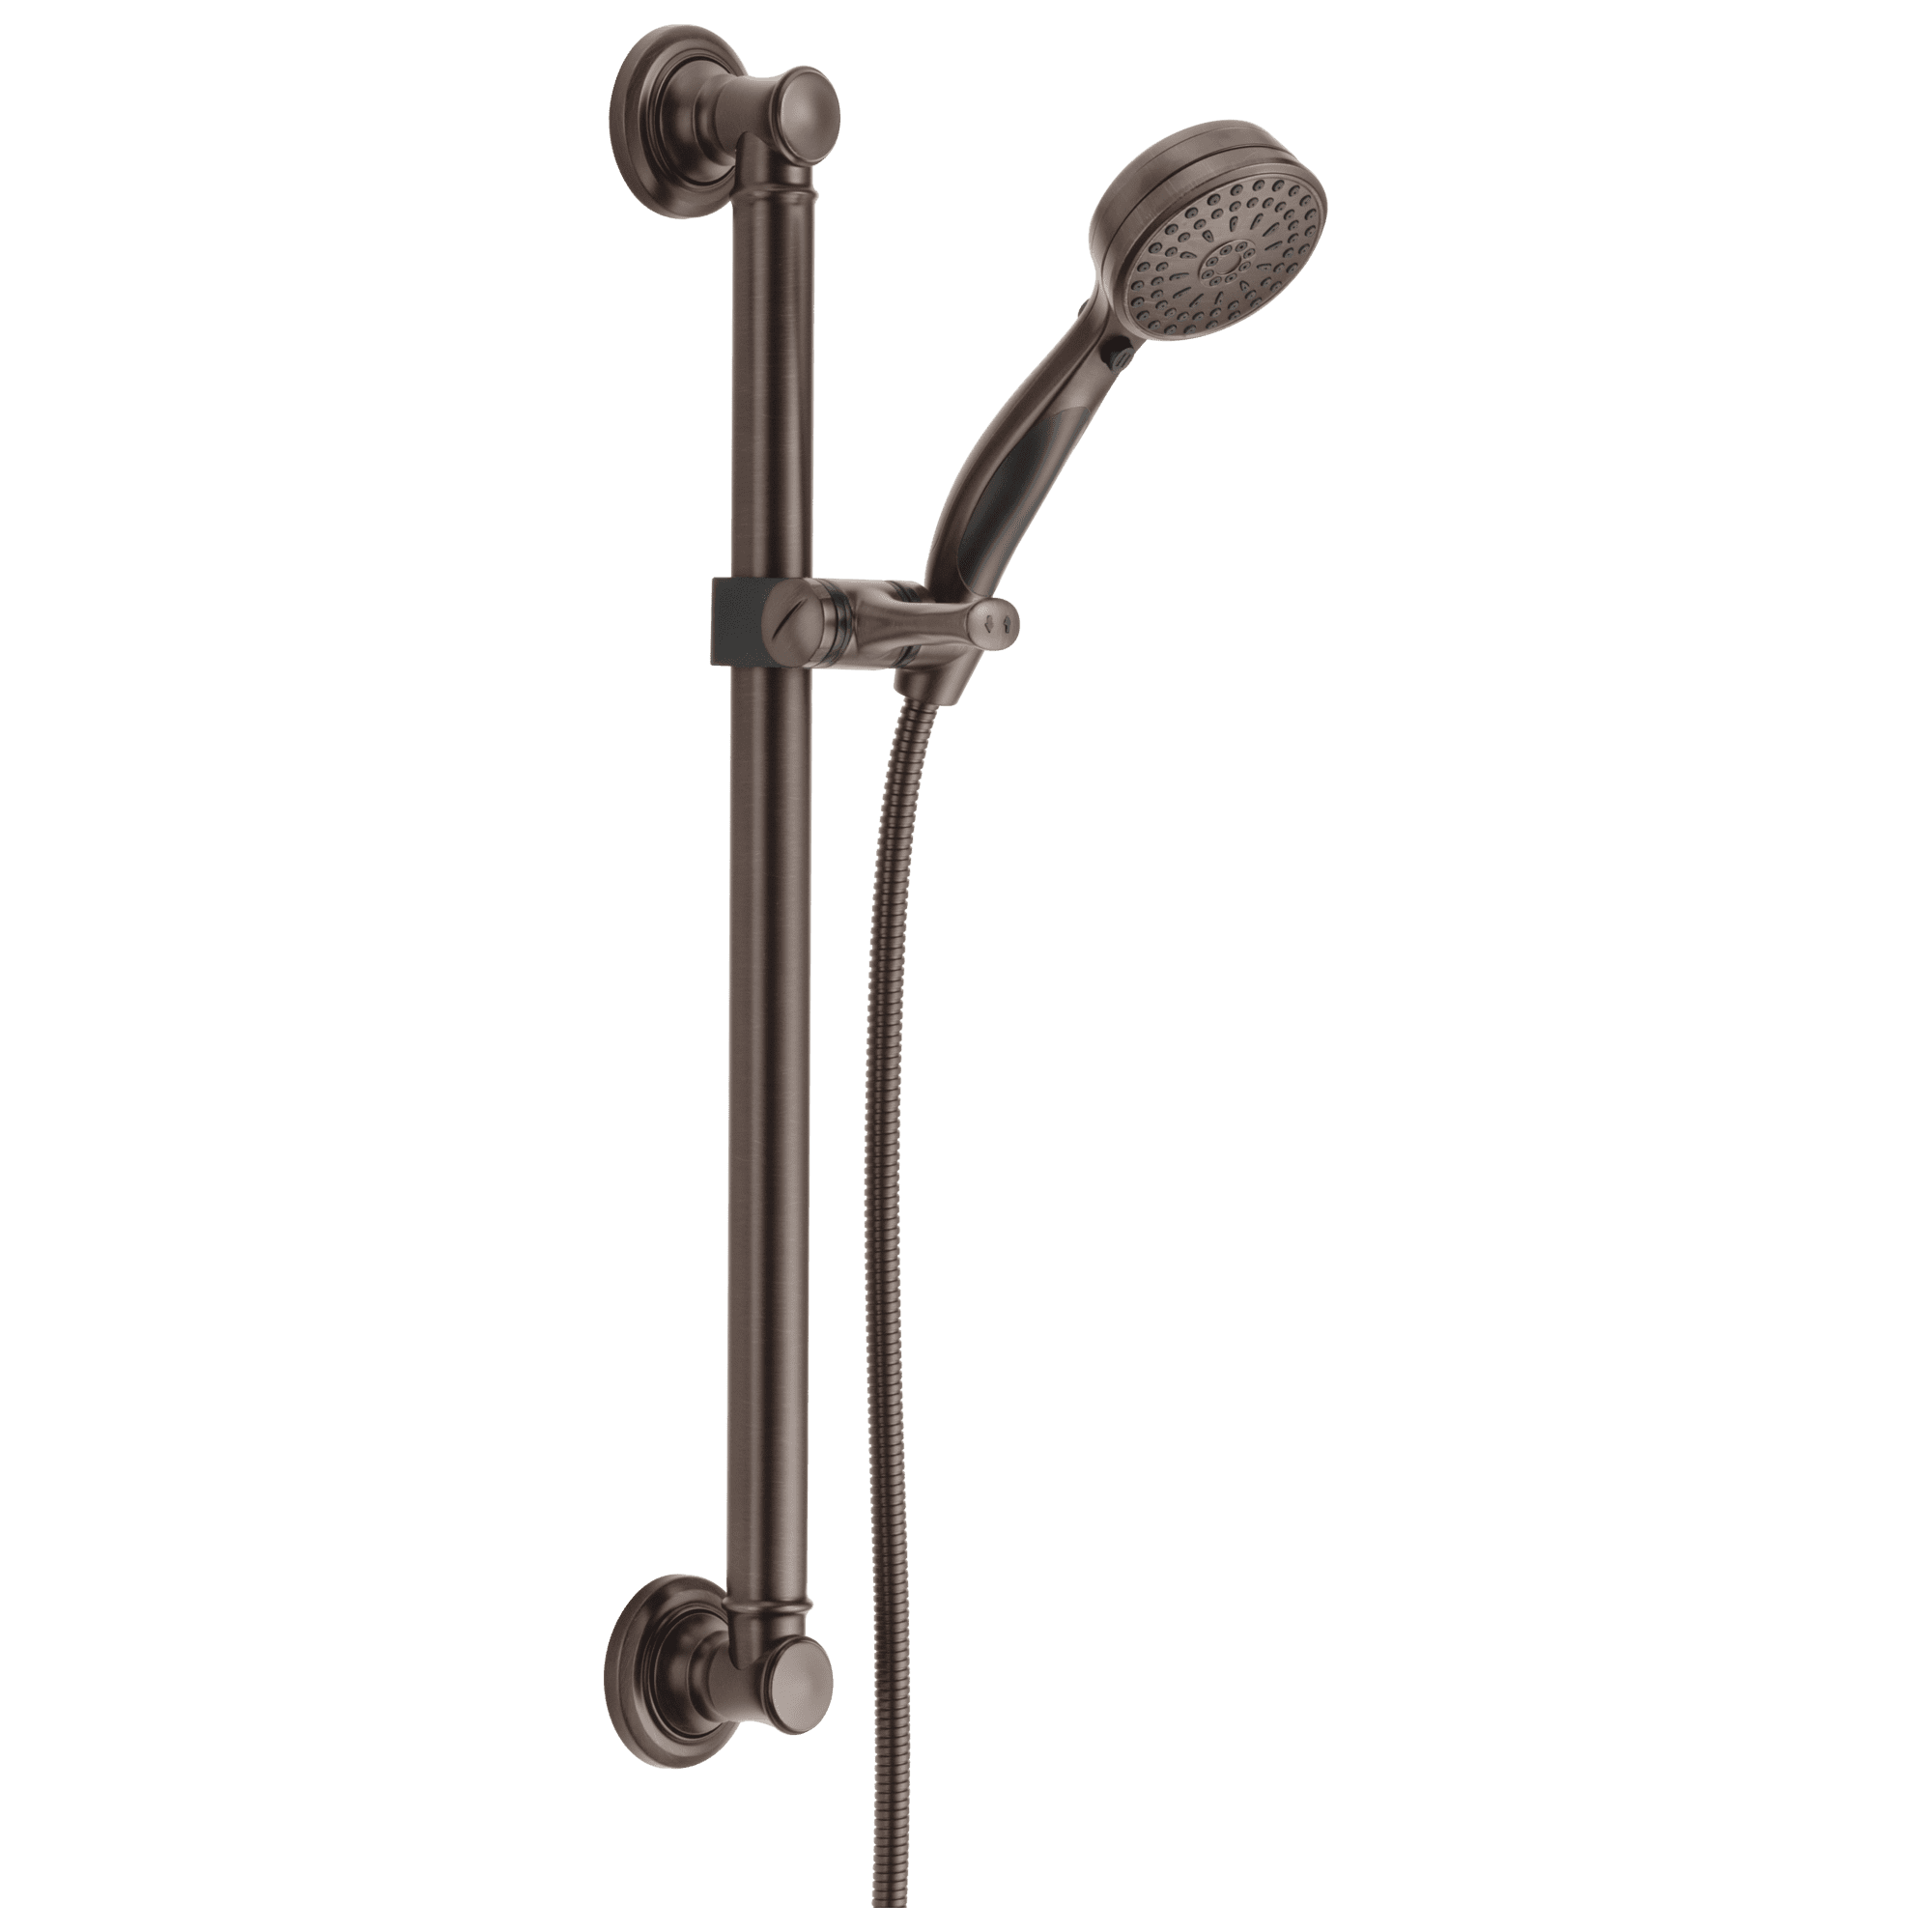 51900-rb Decorative Ada Shower Kit Traditional - Venetian Bronze